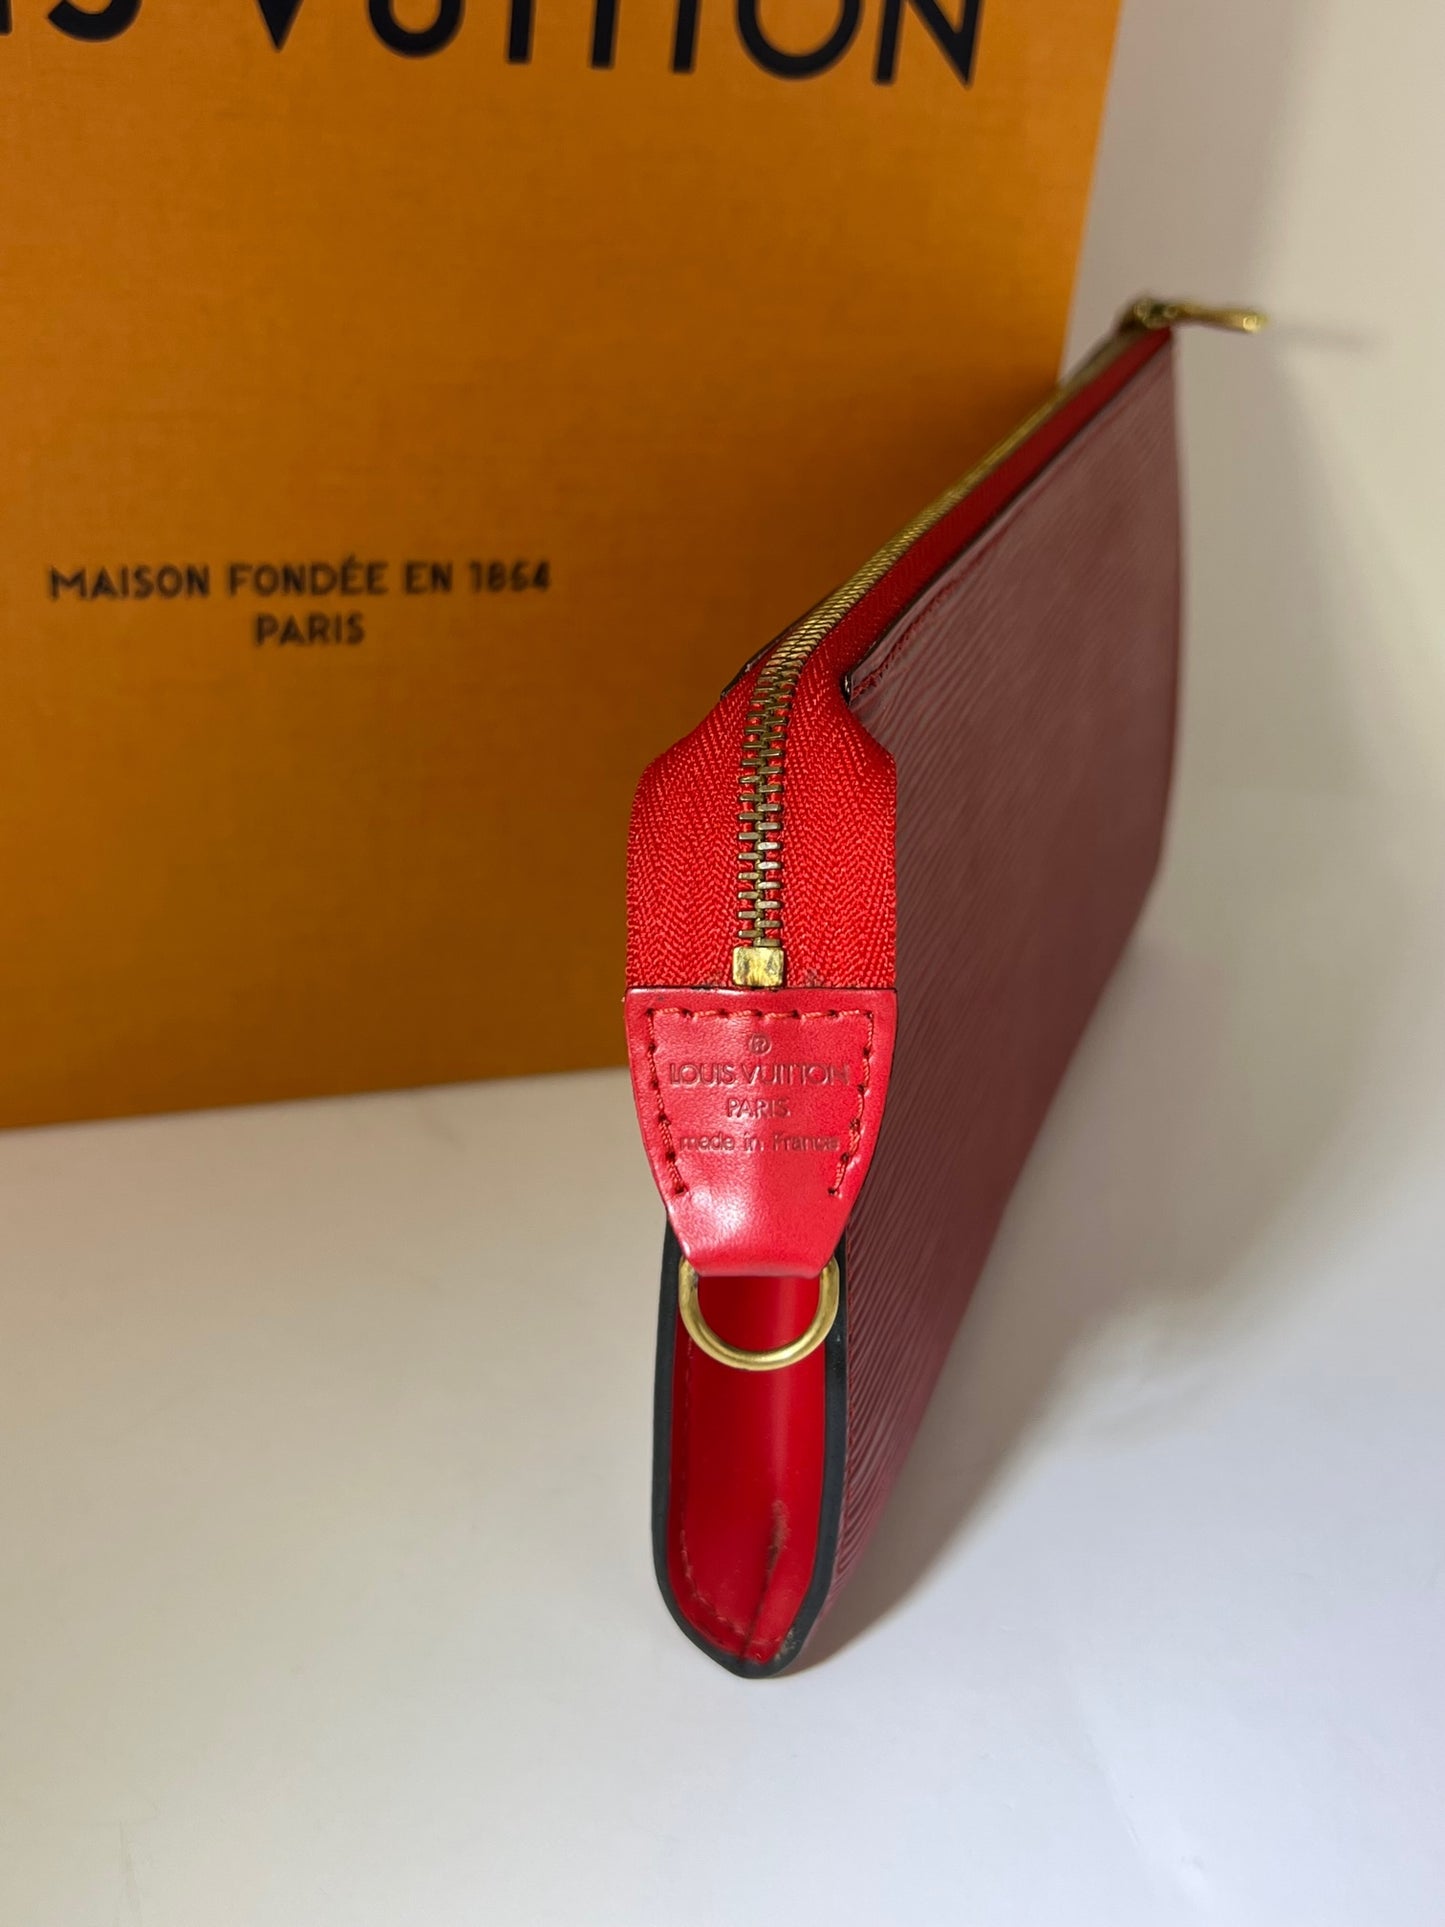 Louis Vuitton Handbag EPI 24 Pochette Accessories Red Leather Crossbody Bag Preowned